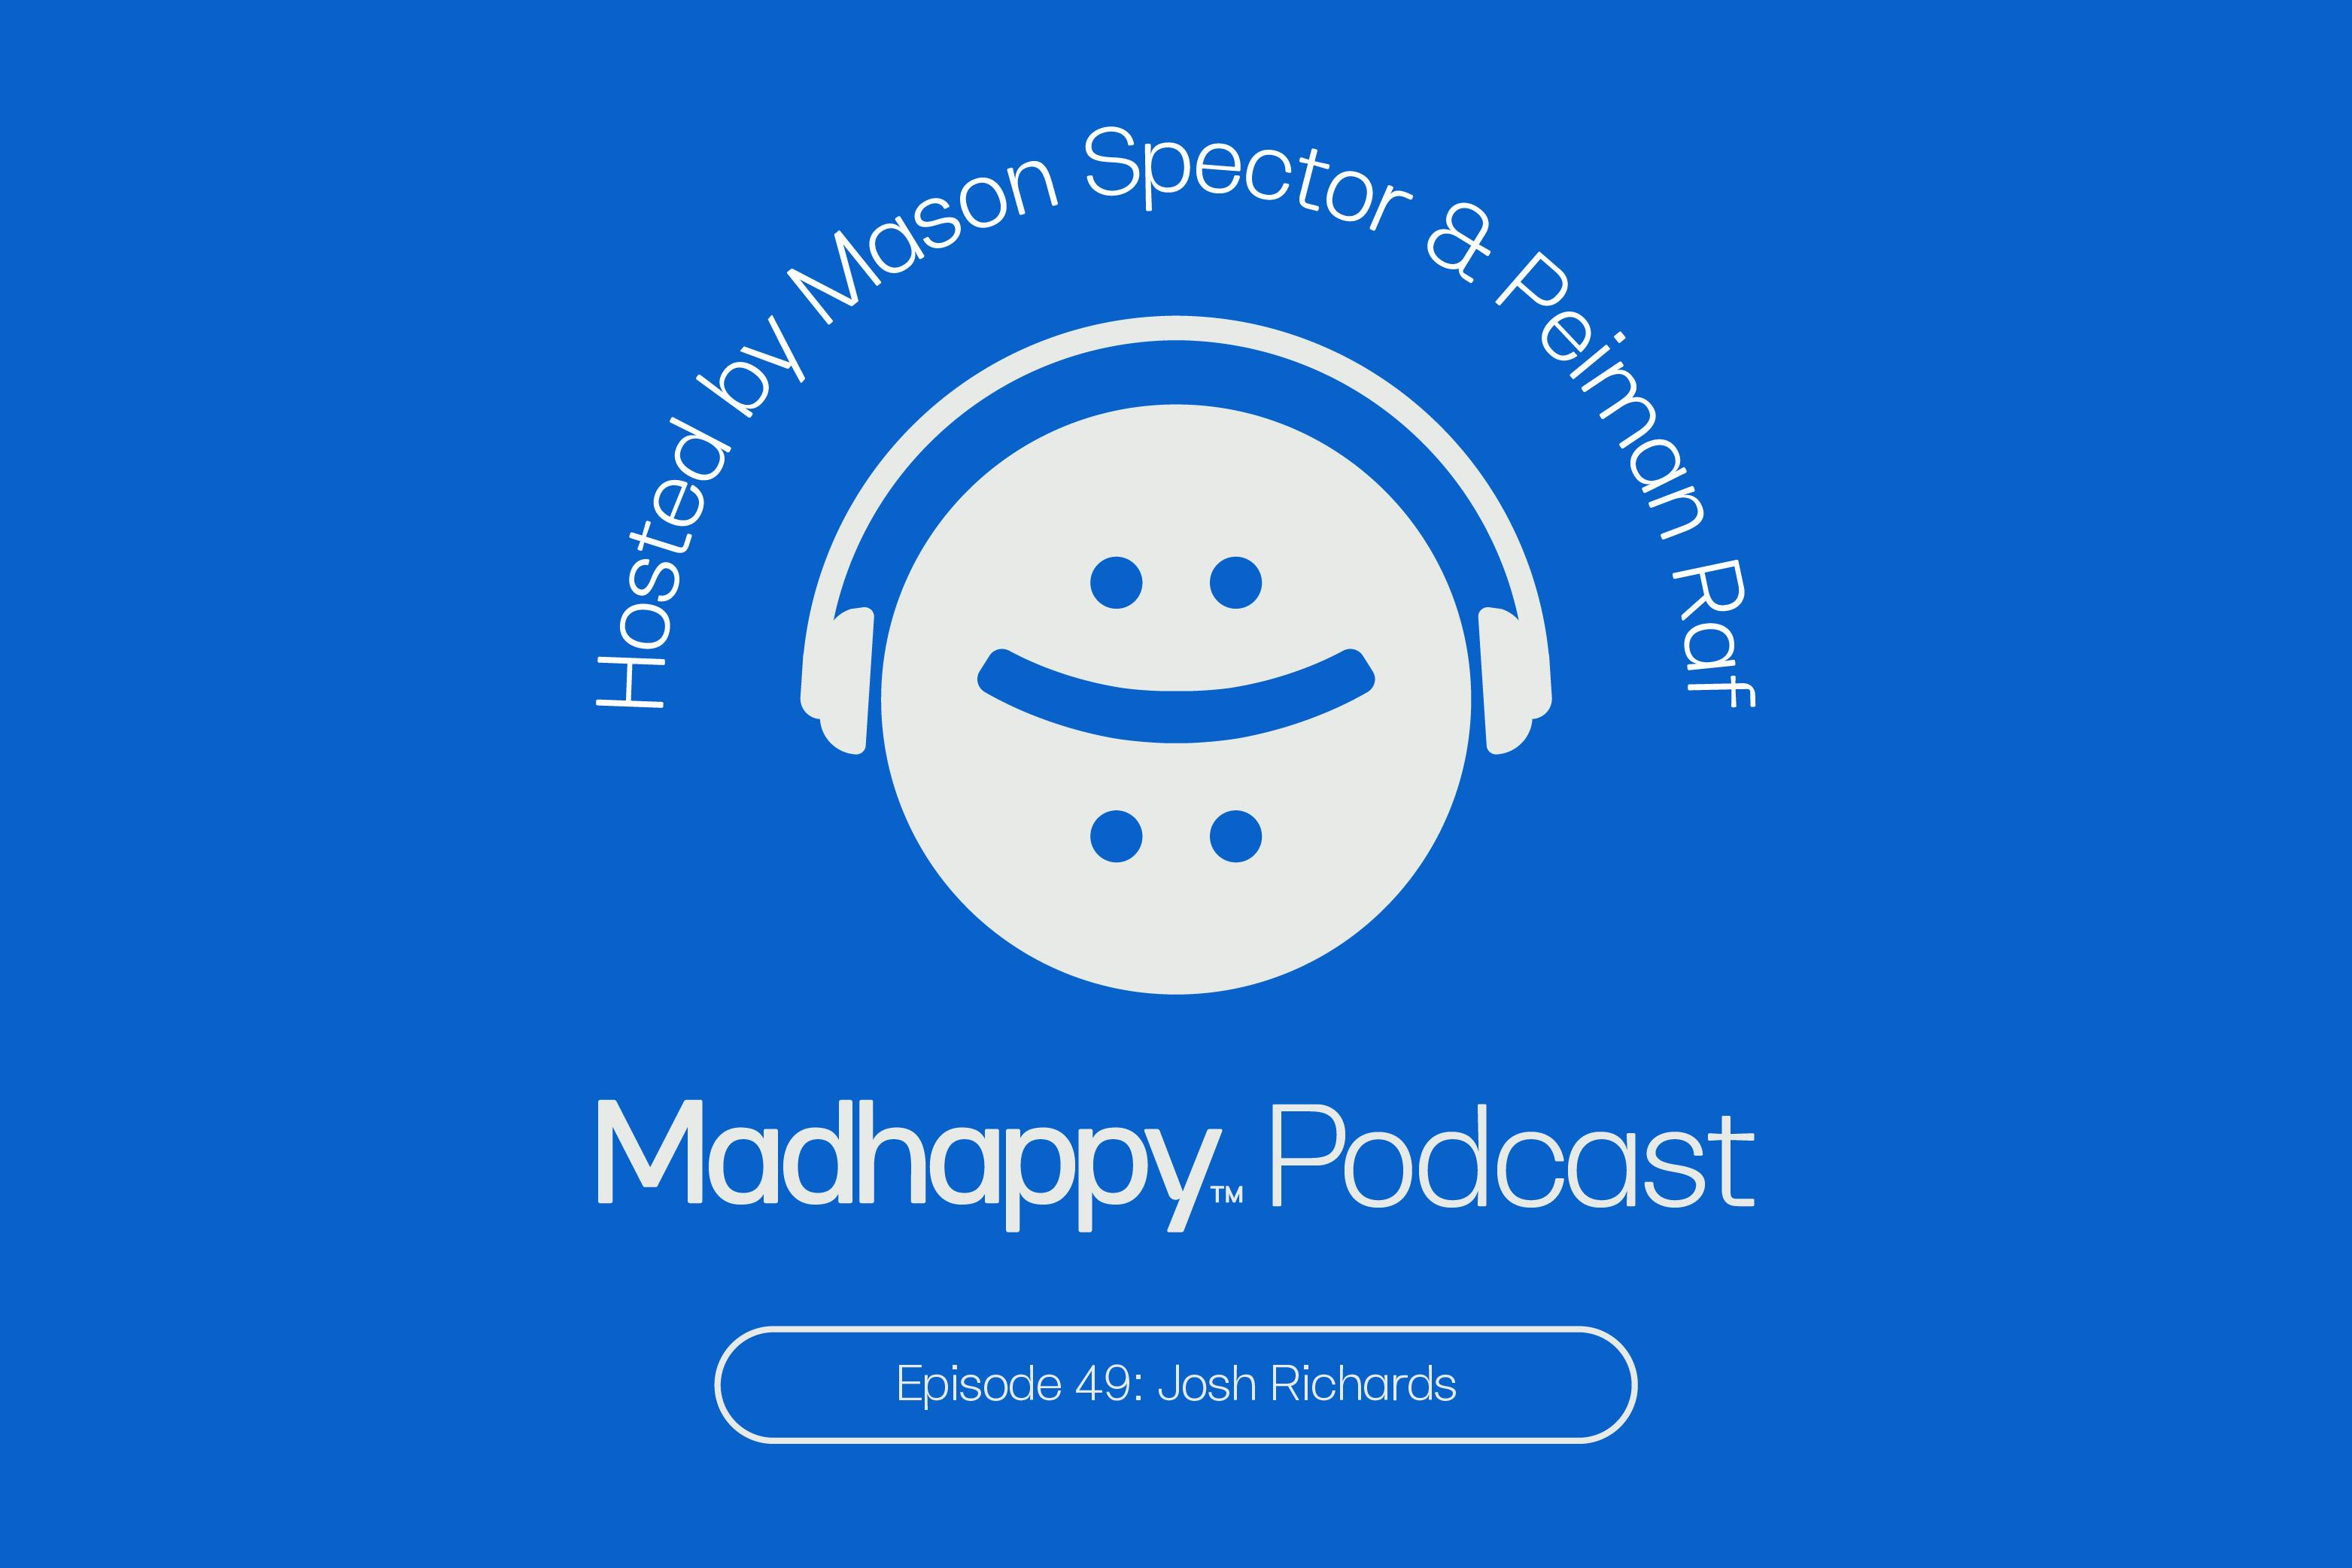 Episode 49: Josh Richards on Mental Health and Social Media